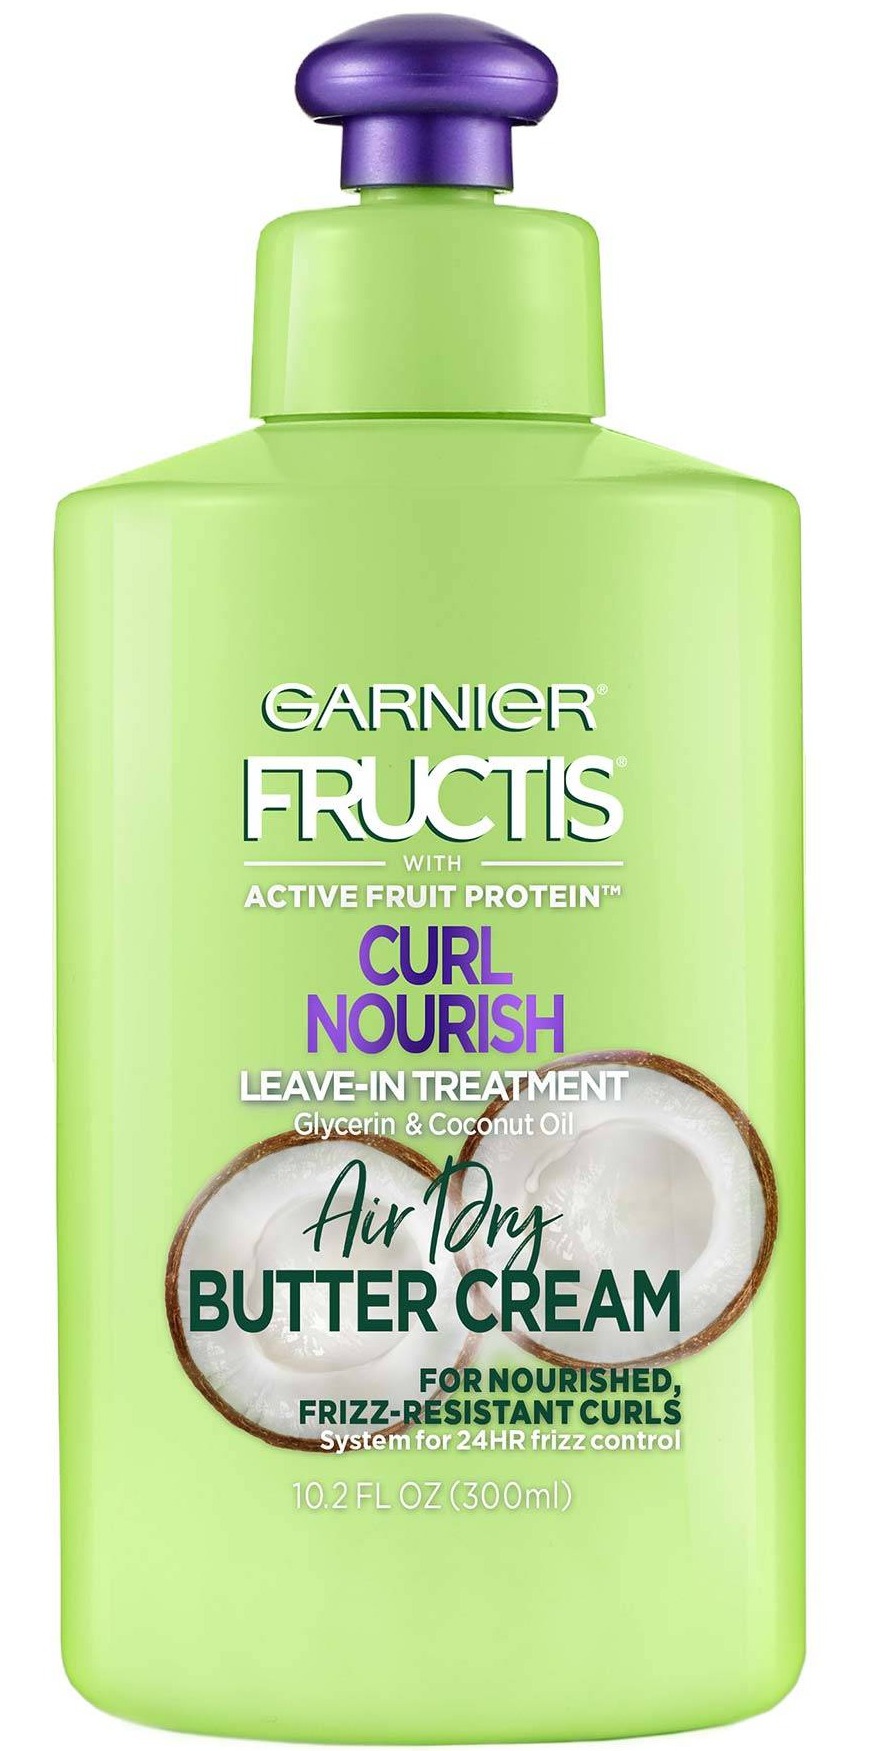 Garnier Fructis Triple Nutrition Curl Nourish Butter Cream Leave-in Treatment